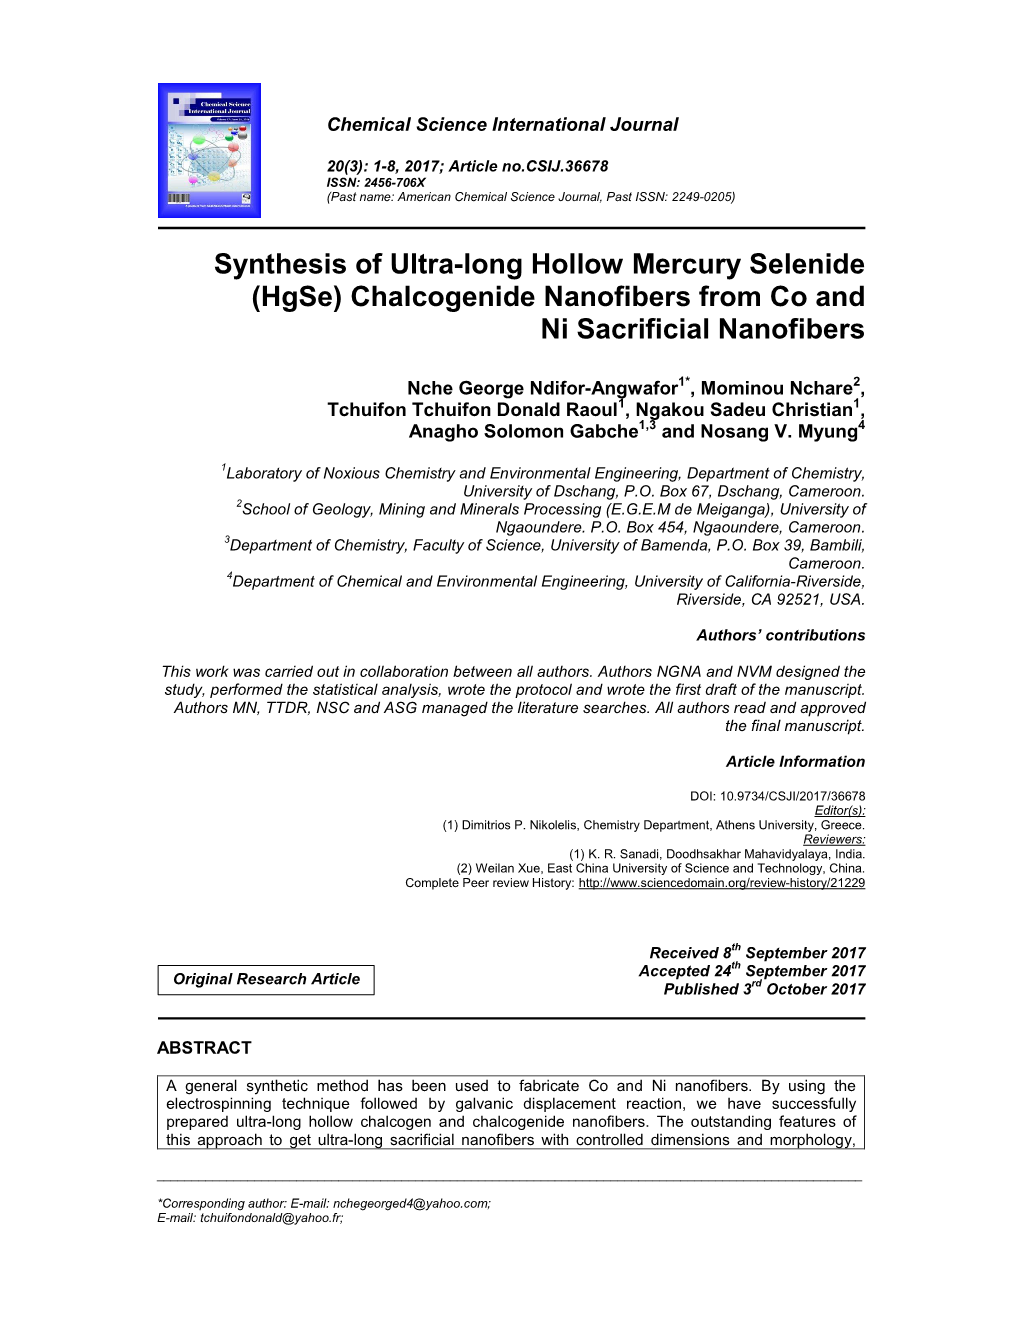 Synthesis of Ultra-Long Hollow Mercury Selenide (Hgse) Chalcogenide Nanofibers from Co and Ni Sacrificial Nanofibers